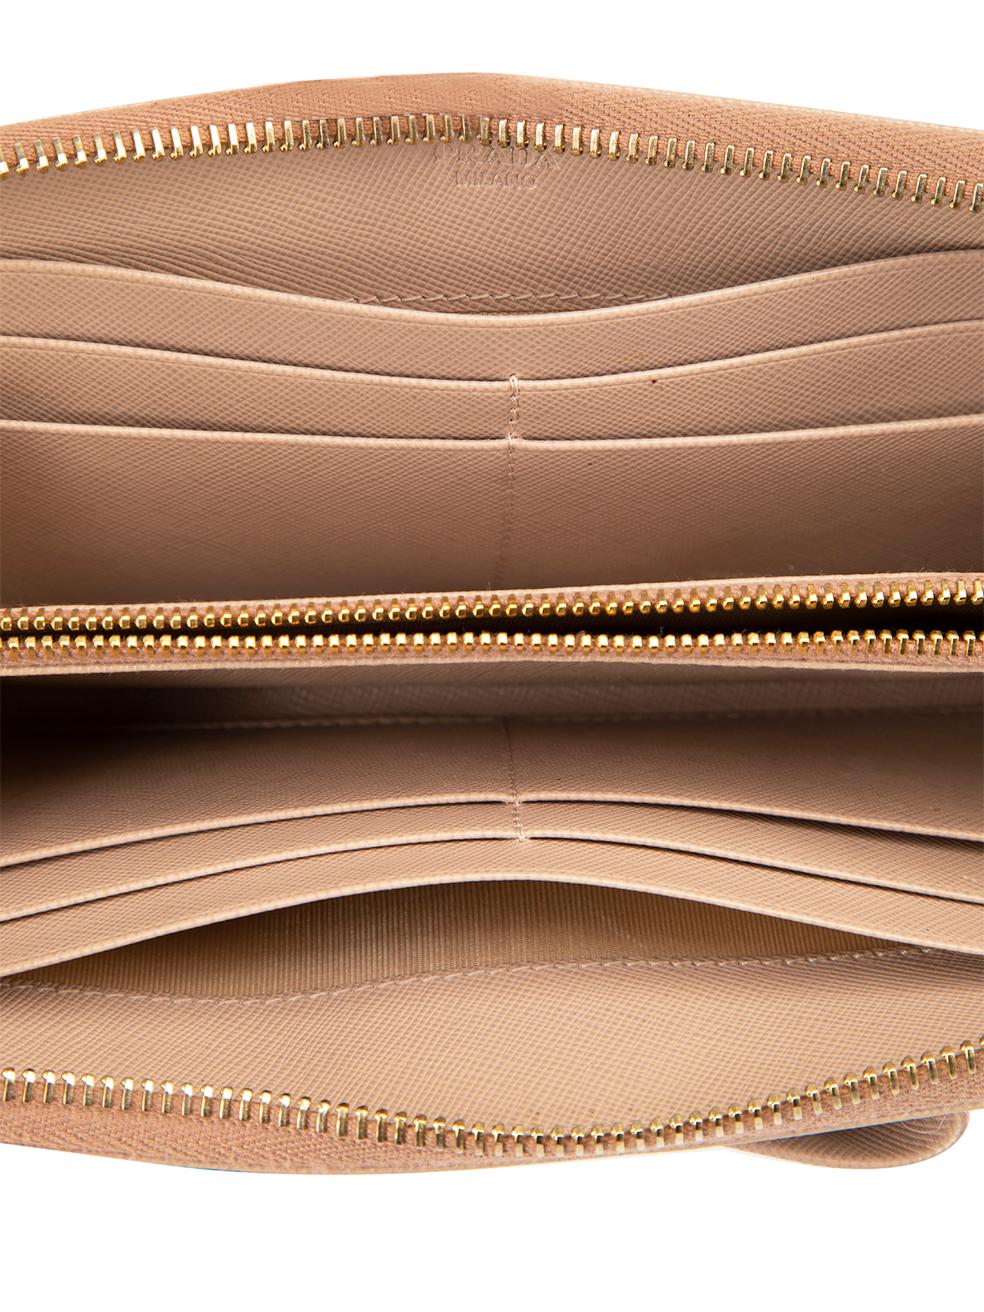 Prada Women's Dusty Pink Bow Detail Continental Wallet 3